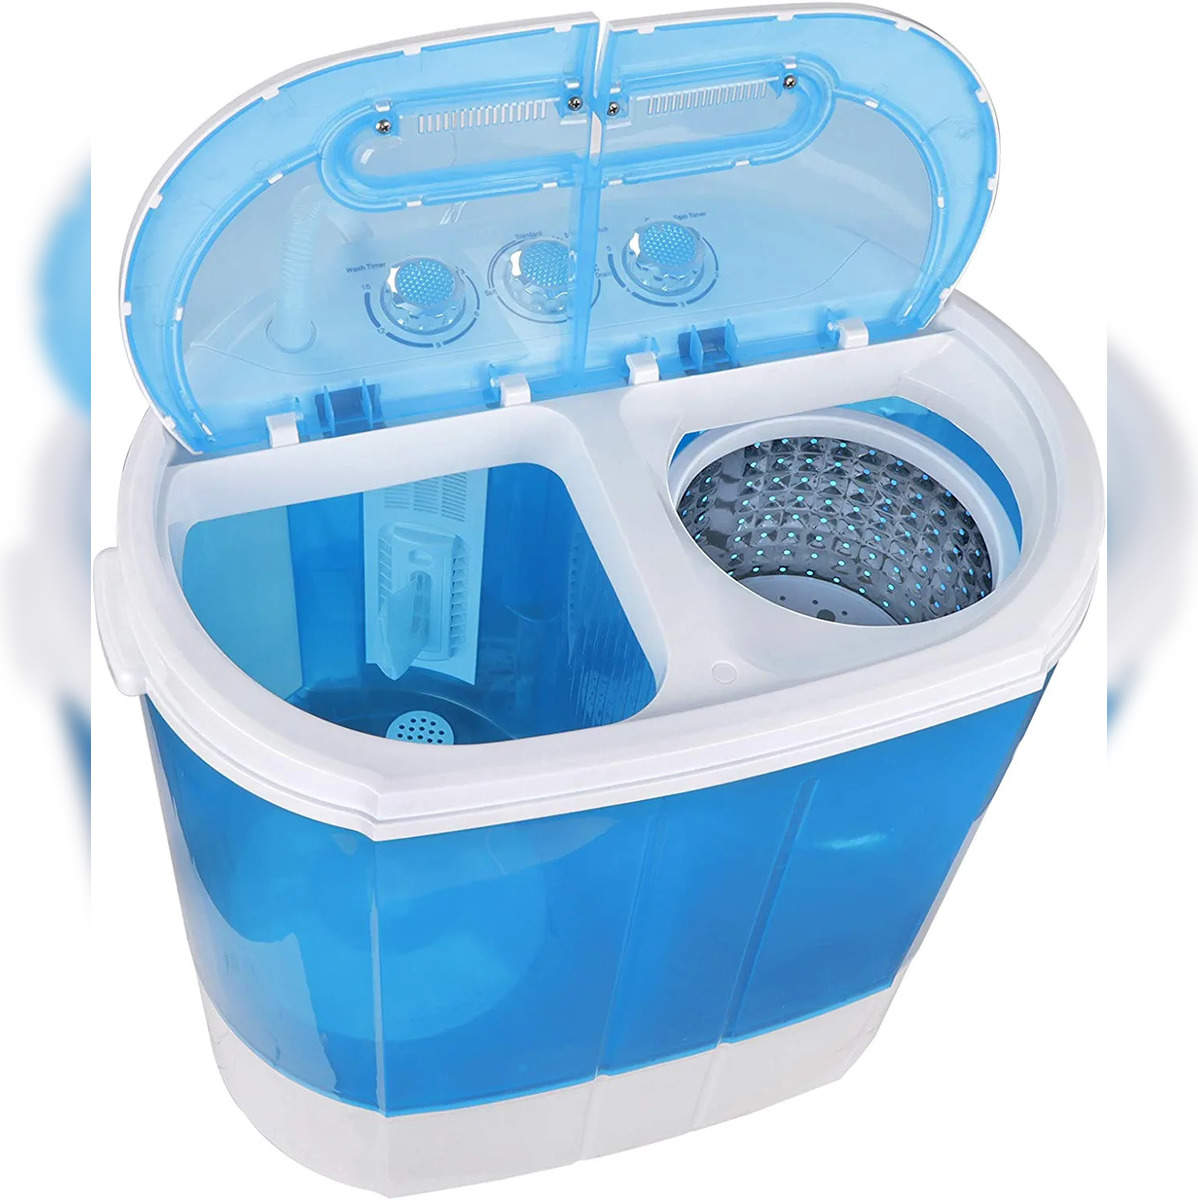 Review SUPER DEAL Compact Mini Twin Tub Washing Machine 2022 